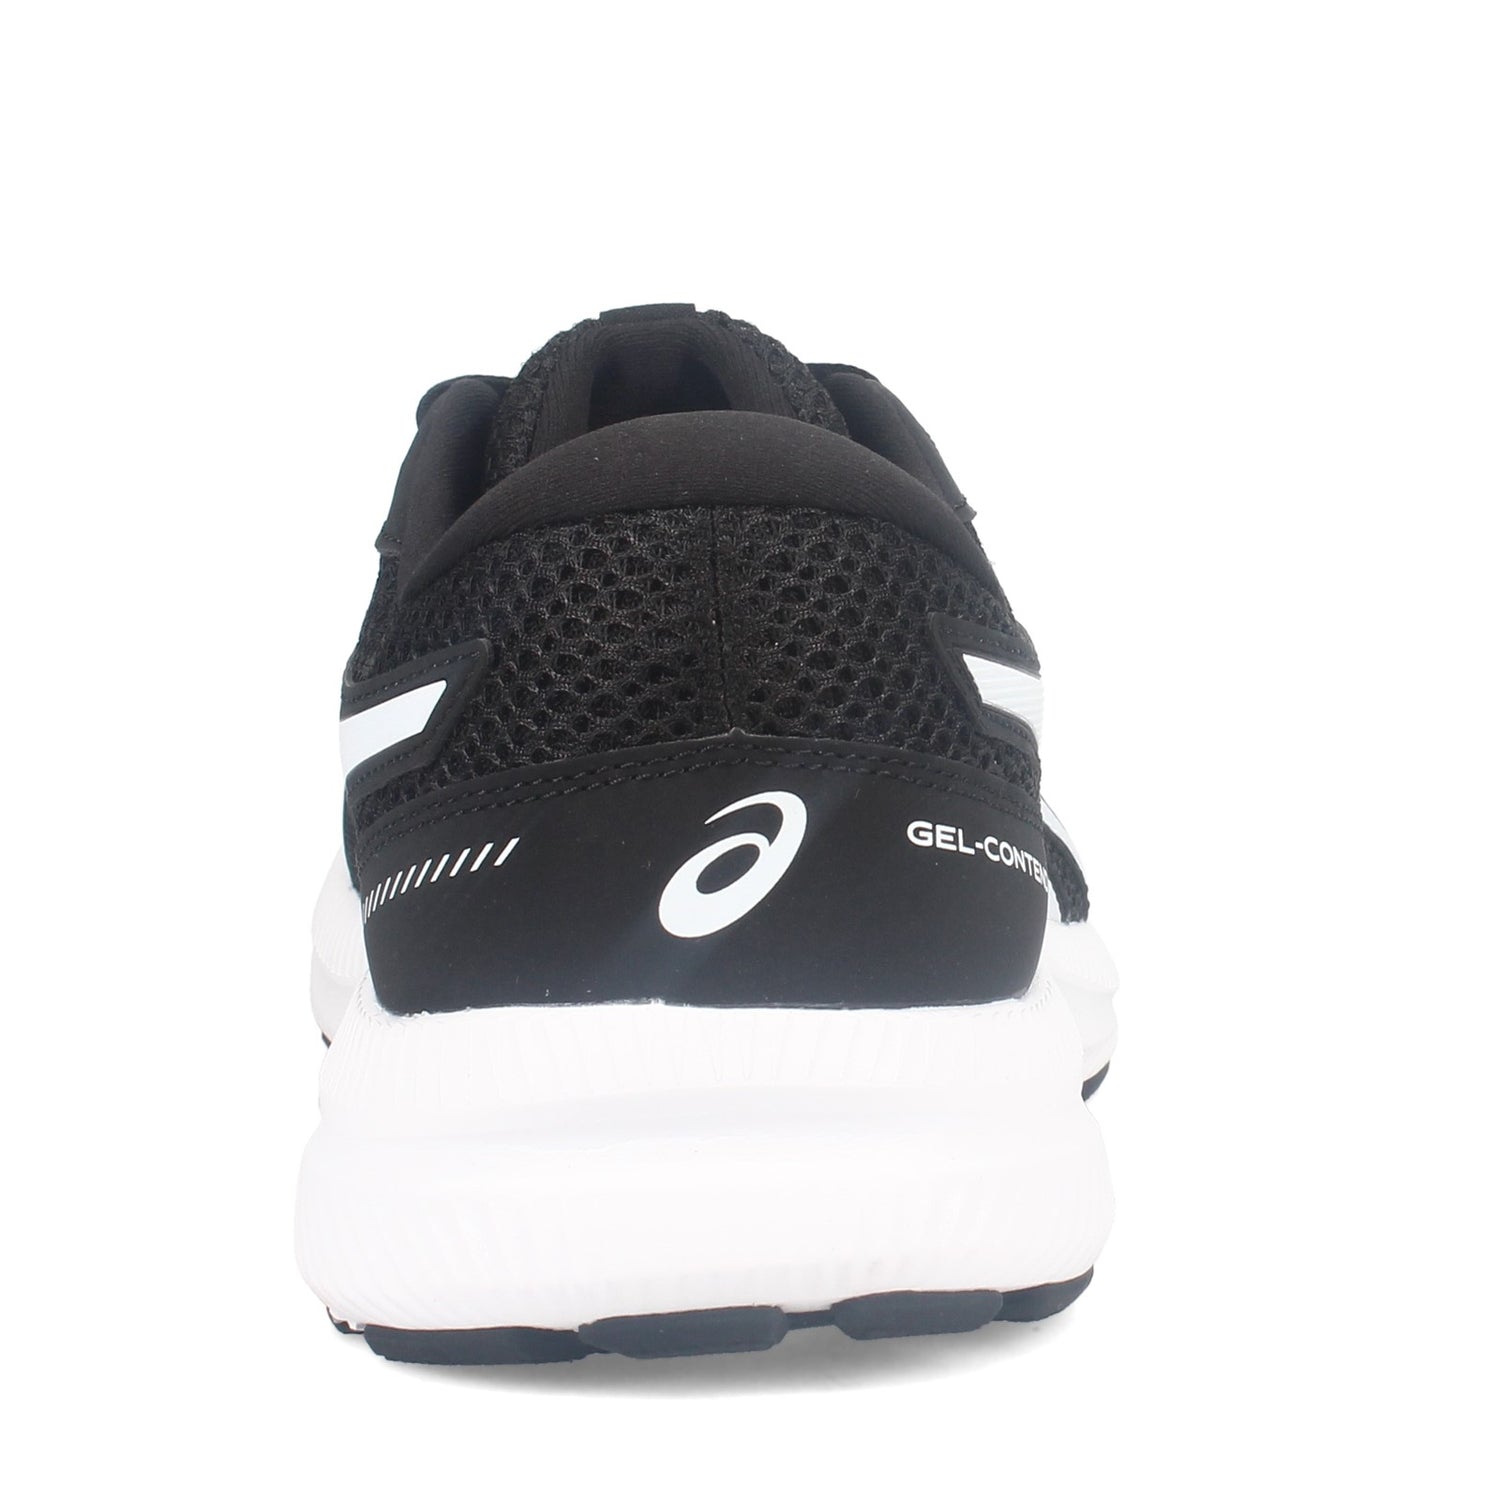 Peltz Shoes  Men's ASICS GEL-Contend 7 Running Shoe BLACK / WHITE 1011B040-002